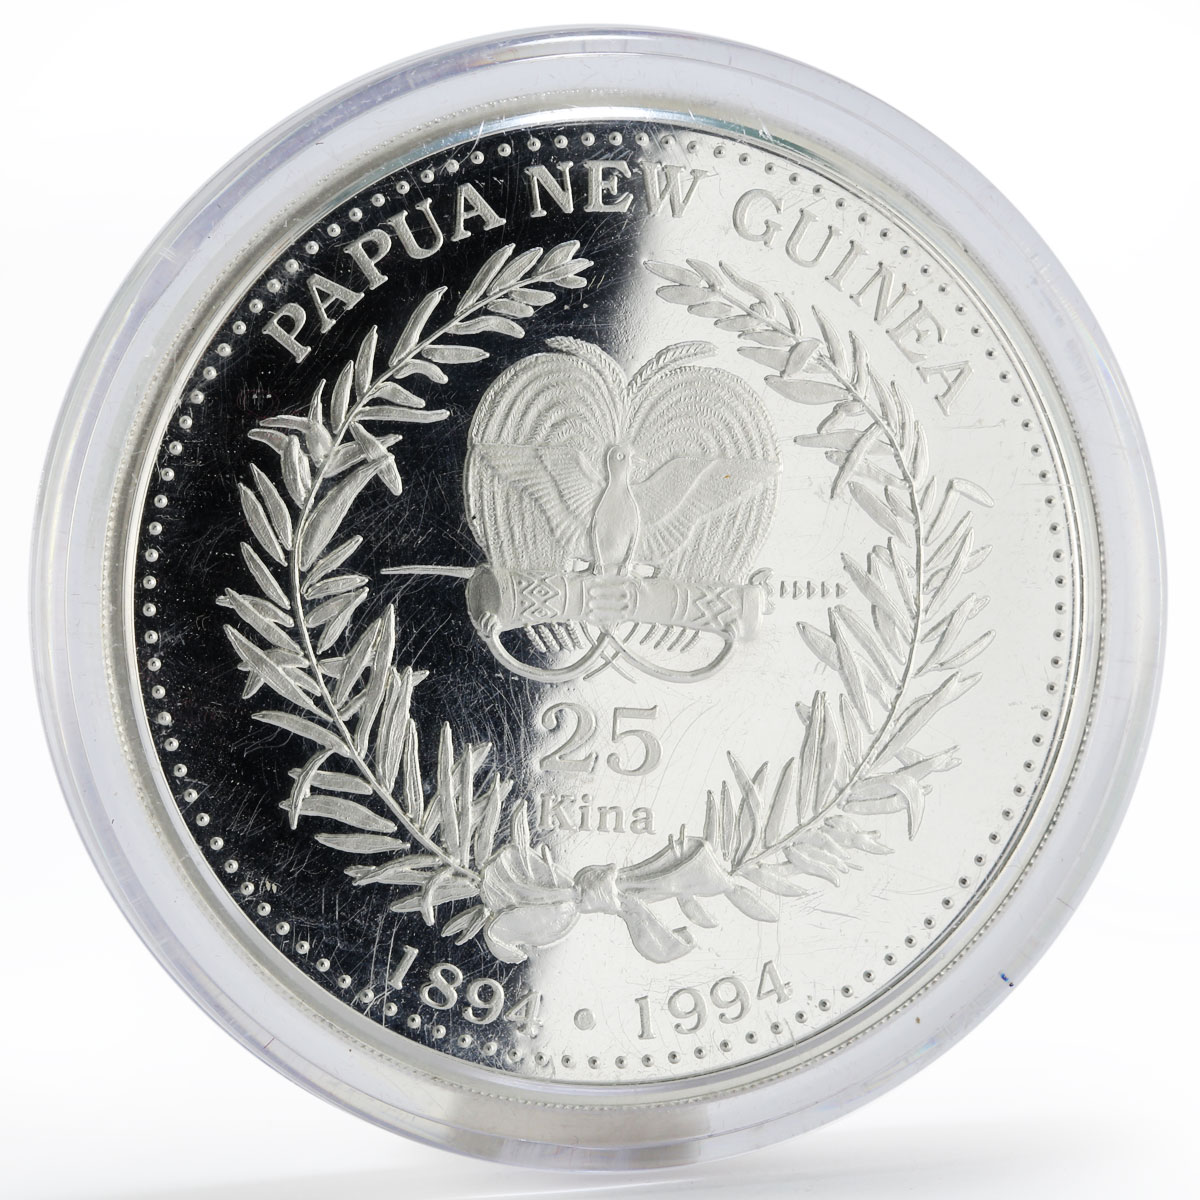 Papua New Guinea 5 kina Birds of Paradise proof silver coin 1992